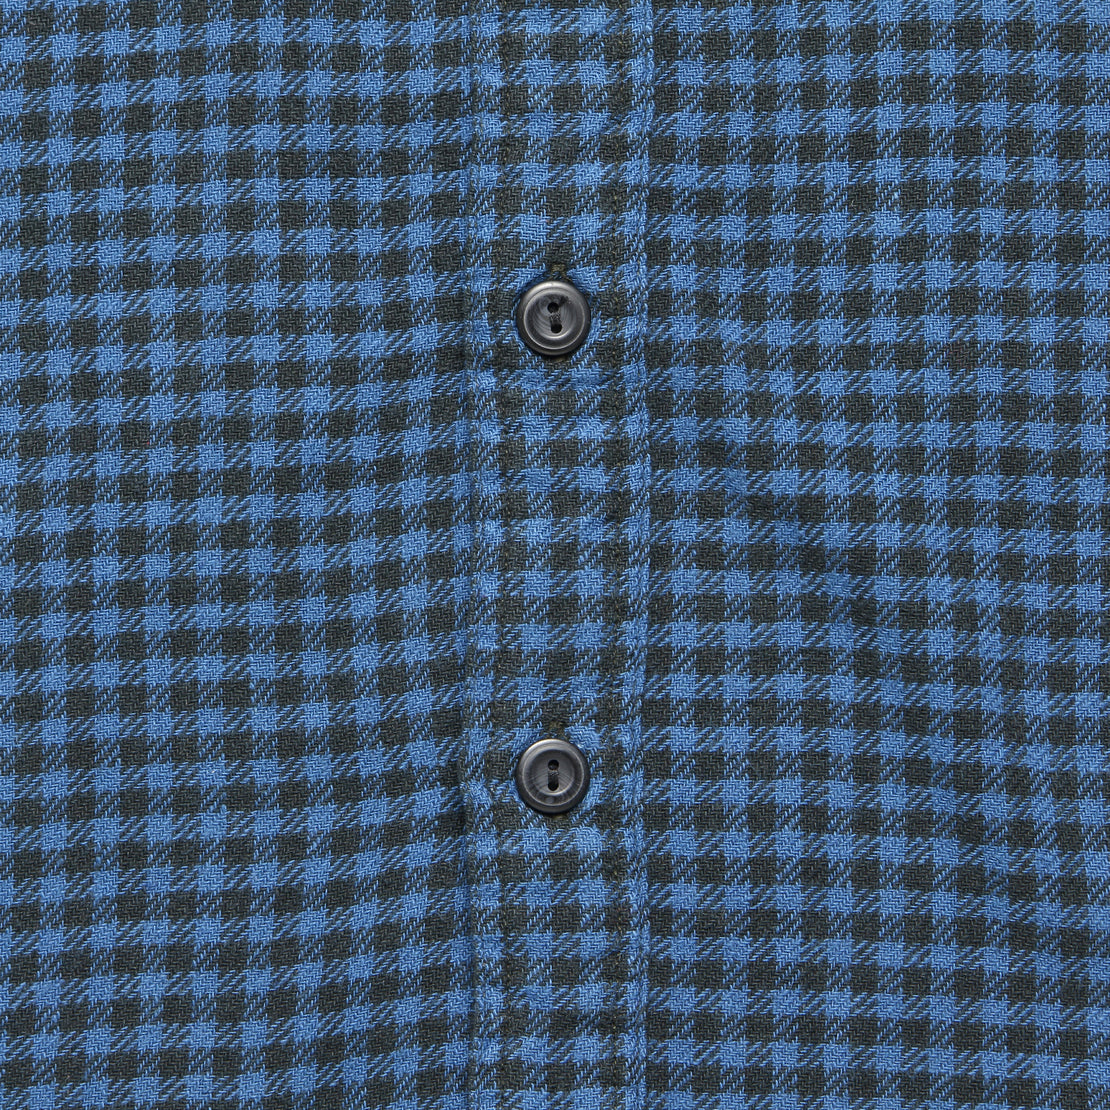 Farrell Cotton/Linen Workshirt - Blue/Sulphur Black - RRL - STAG Provisions - Tops - L/S Woven - Plaid